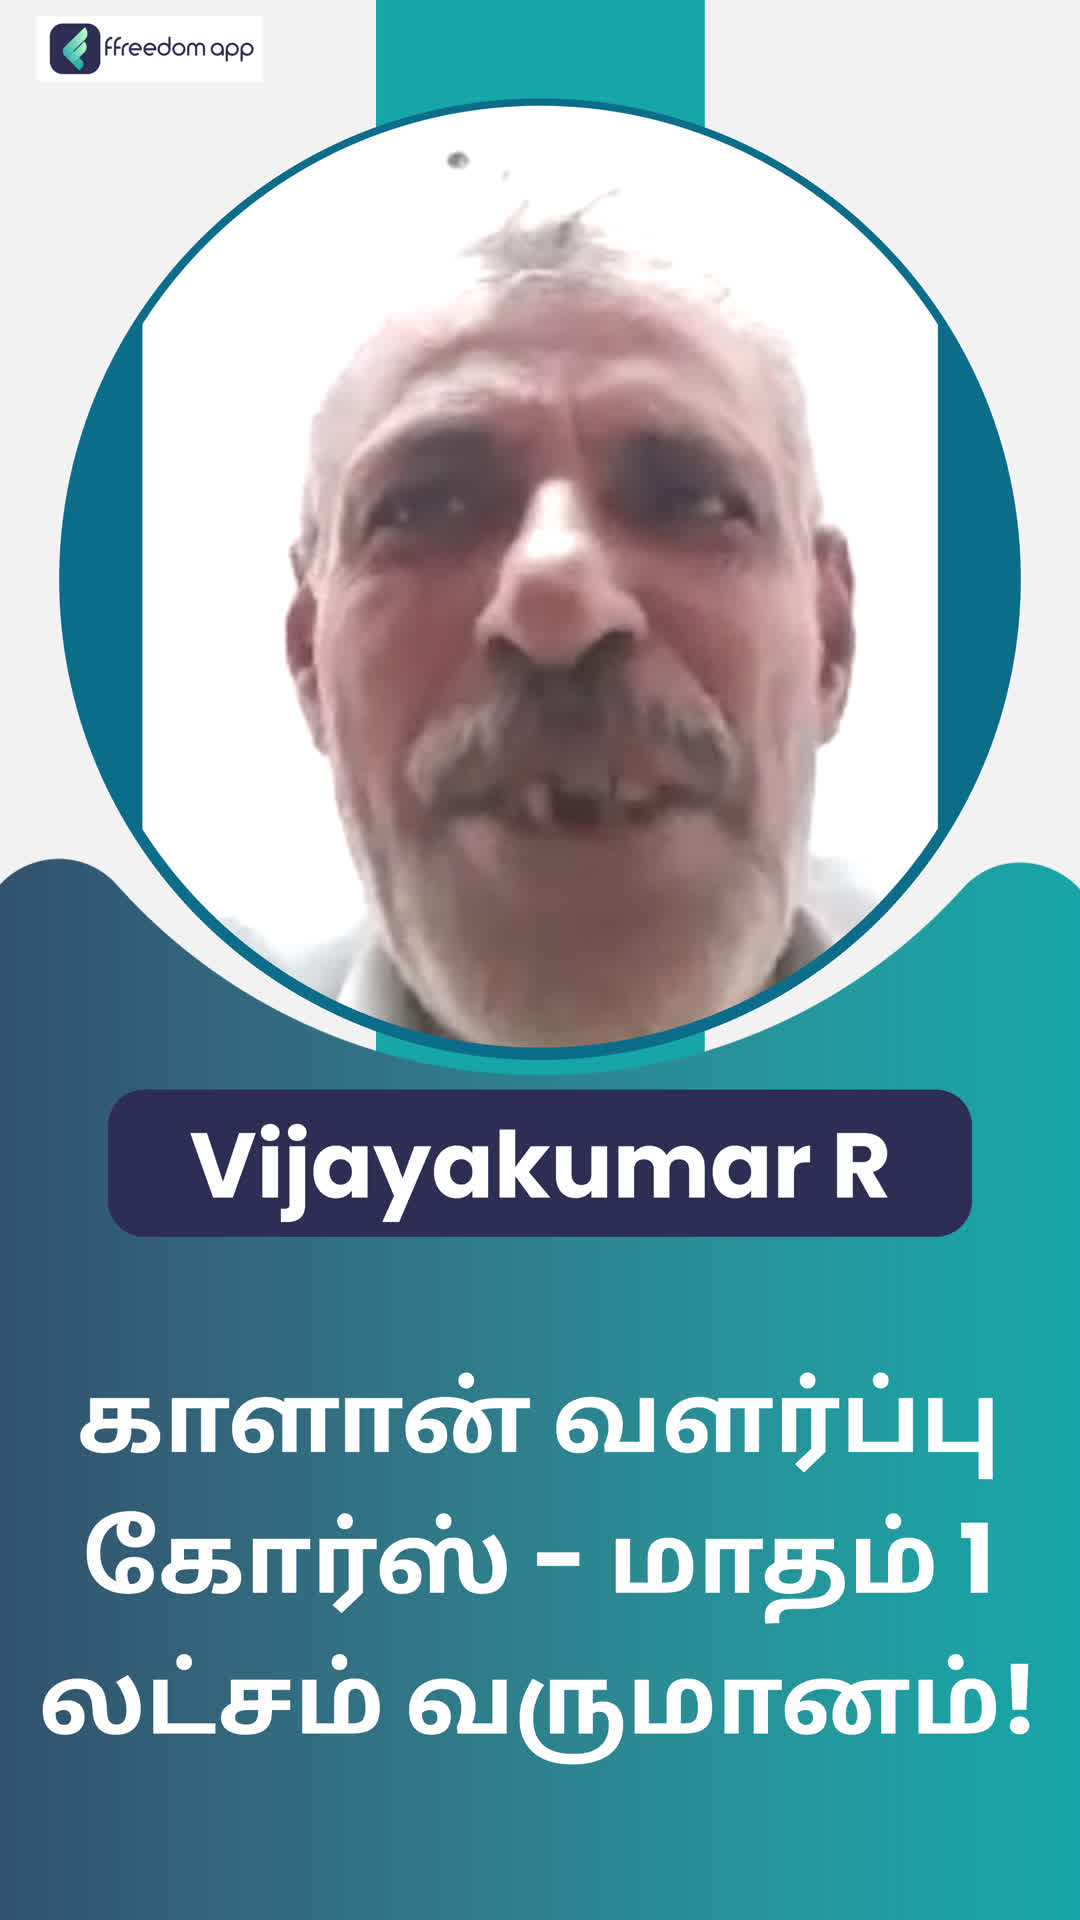 R.VIJAYA KUMAR's Honest Review of ffreedom app - Villupuram ,Tamil Nadu